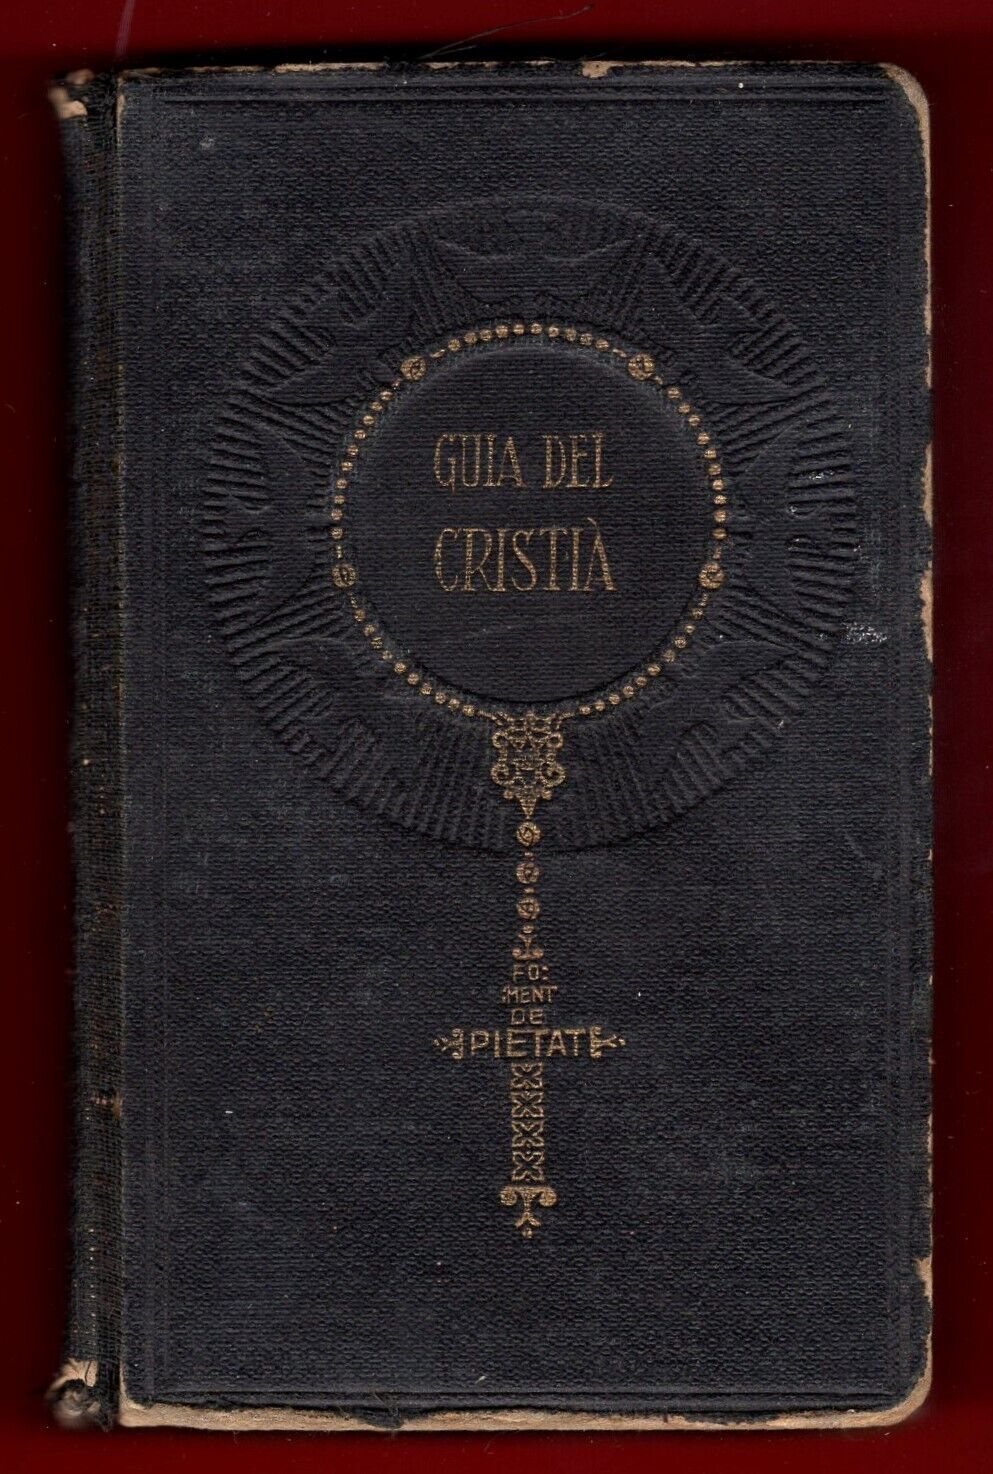 Book antique catolico libro antiguo